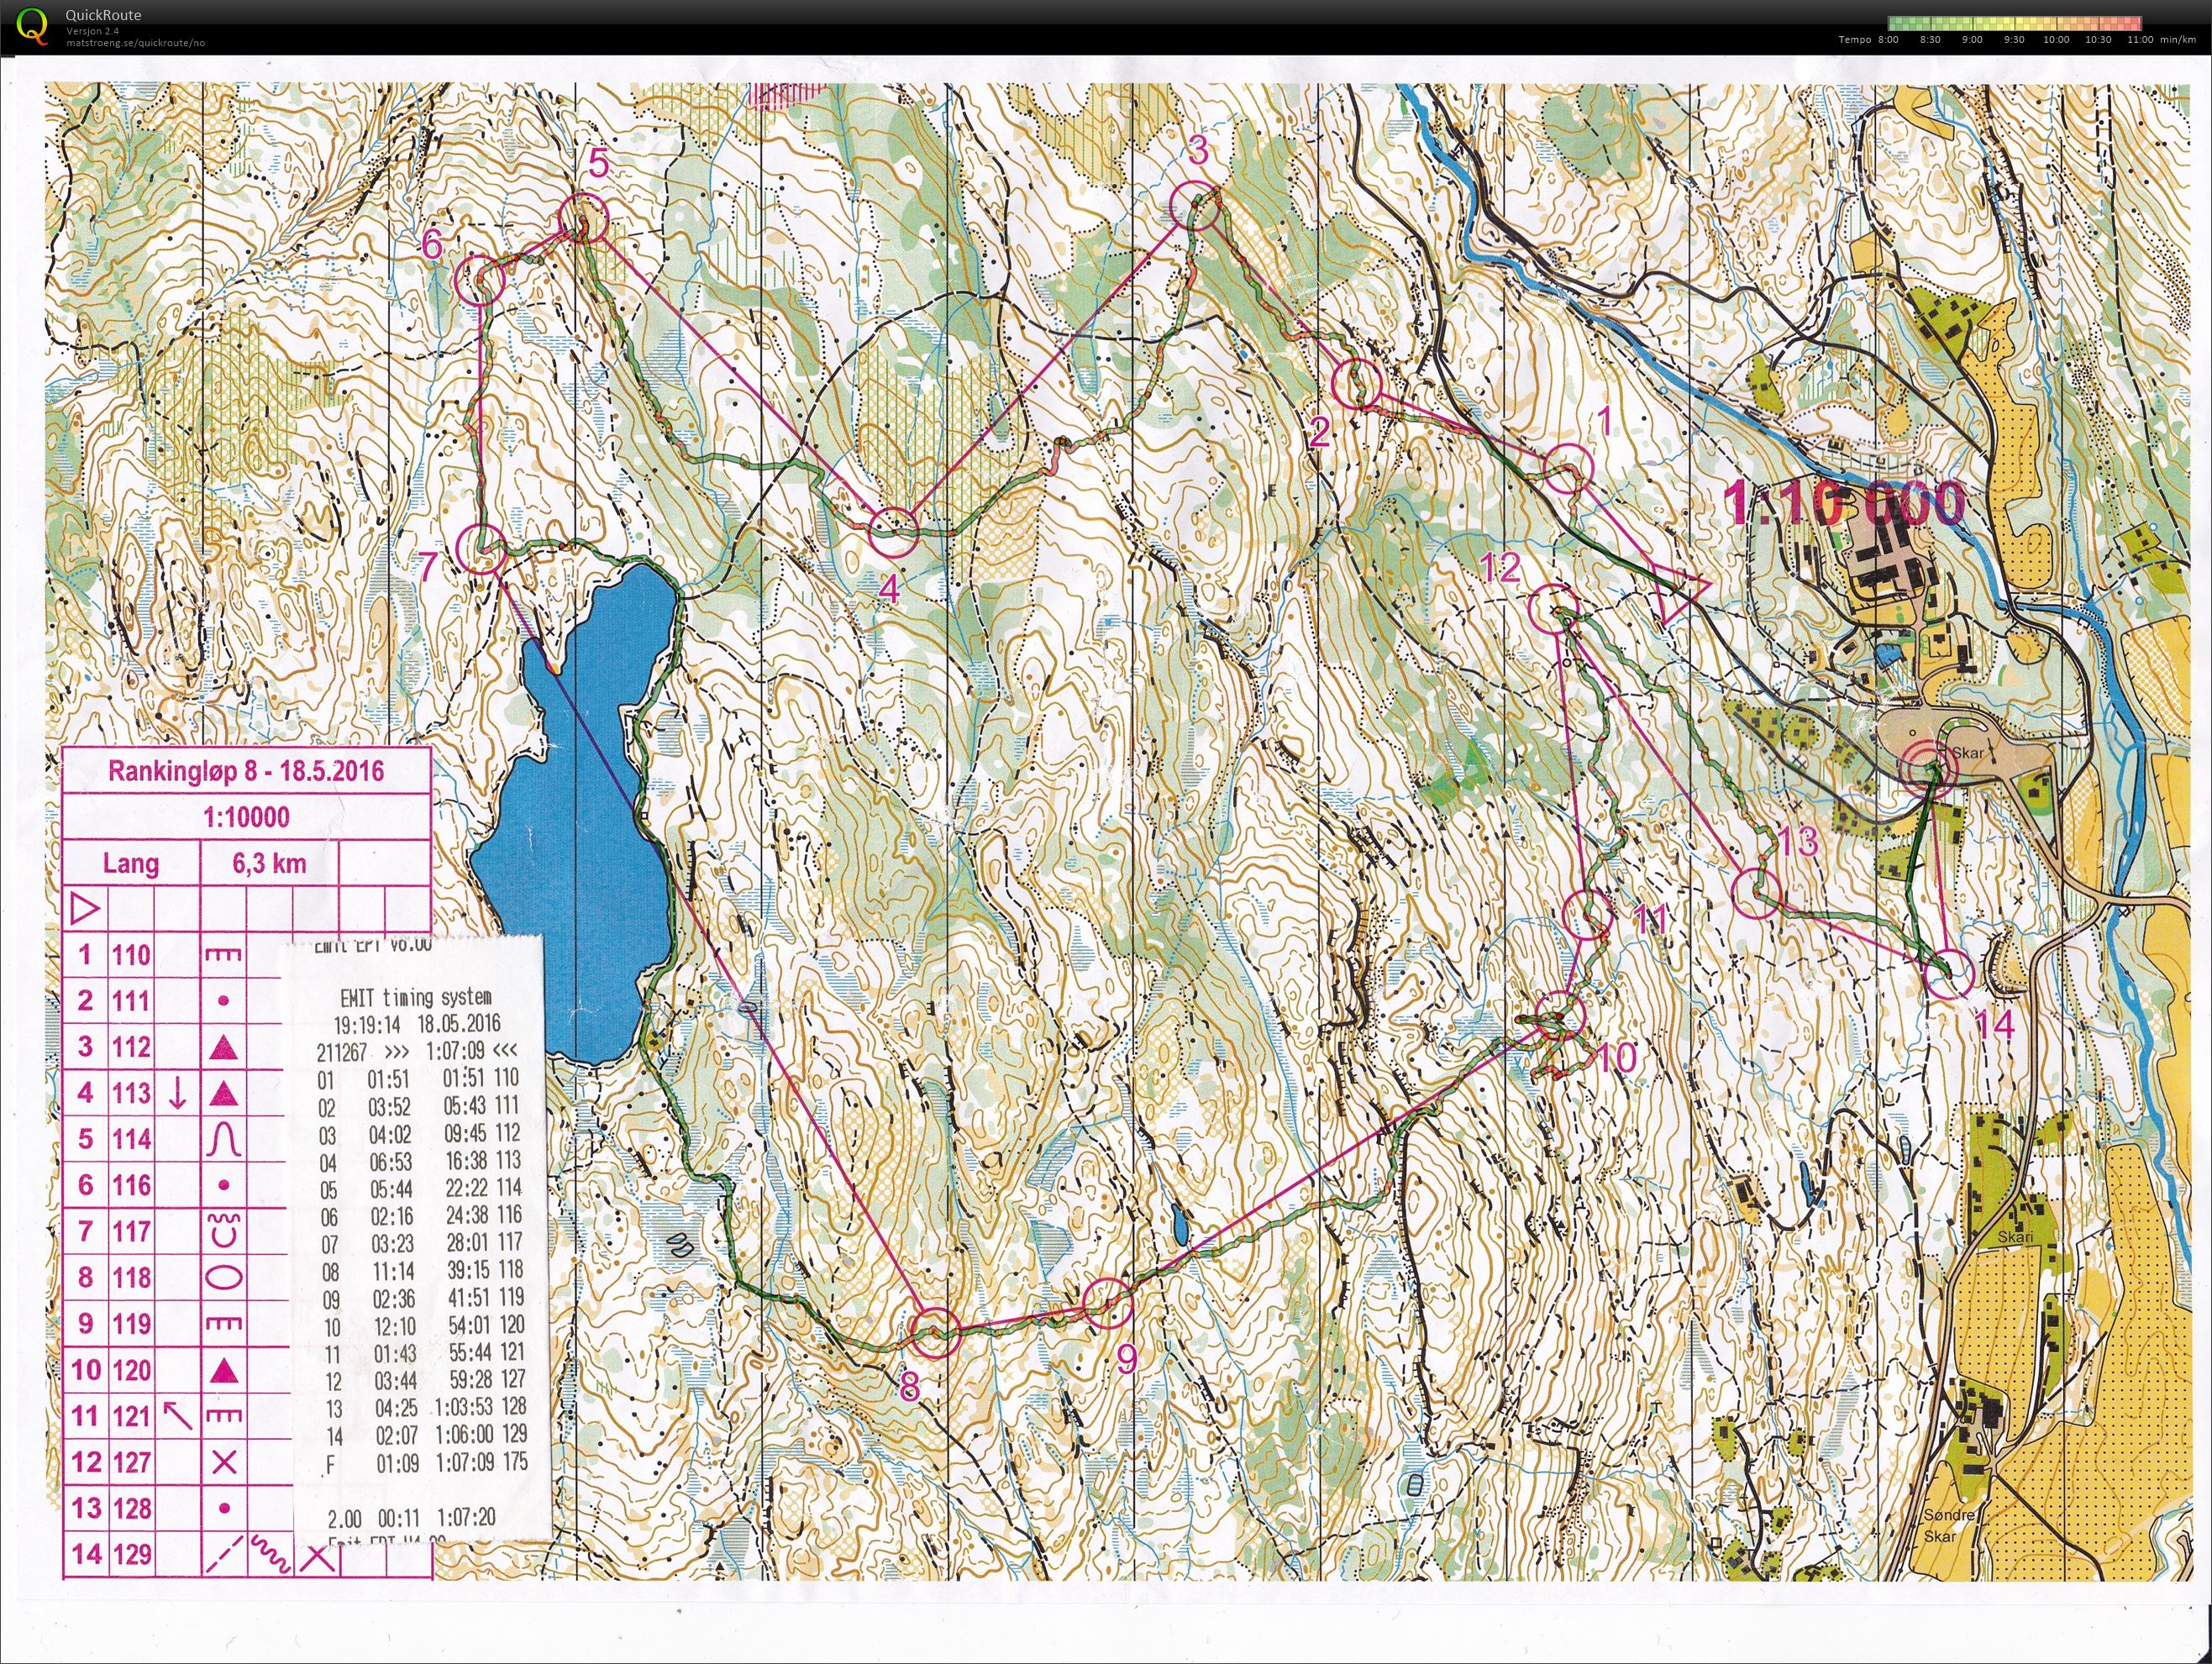 Geoform rankingløp - Lang løype 6,3 km (18/05/2016)